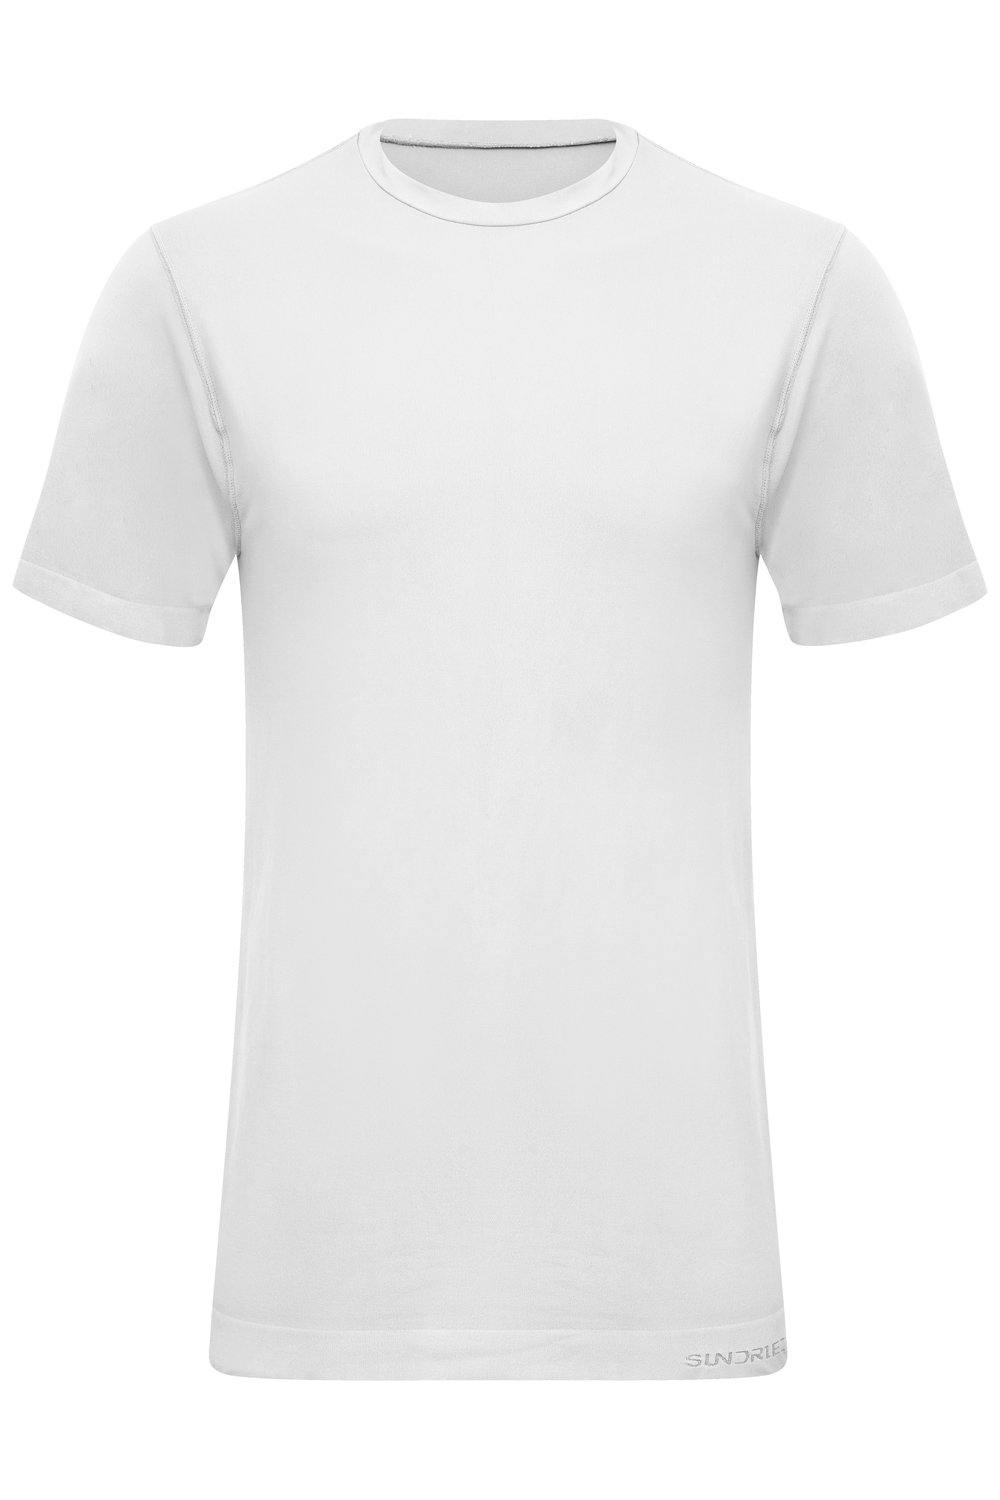 Sundried Eco Tech Men's Fitness Top T-Shirt XXL White SD0136 XXL White Activewear